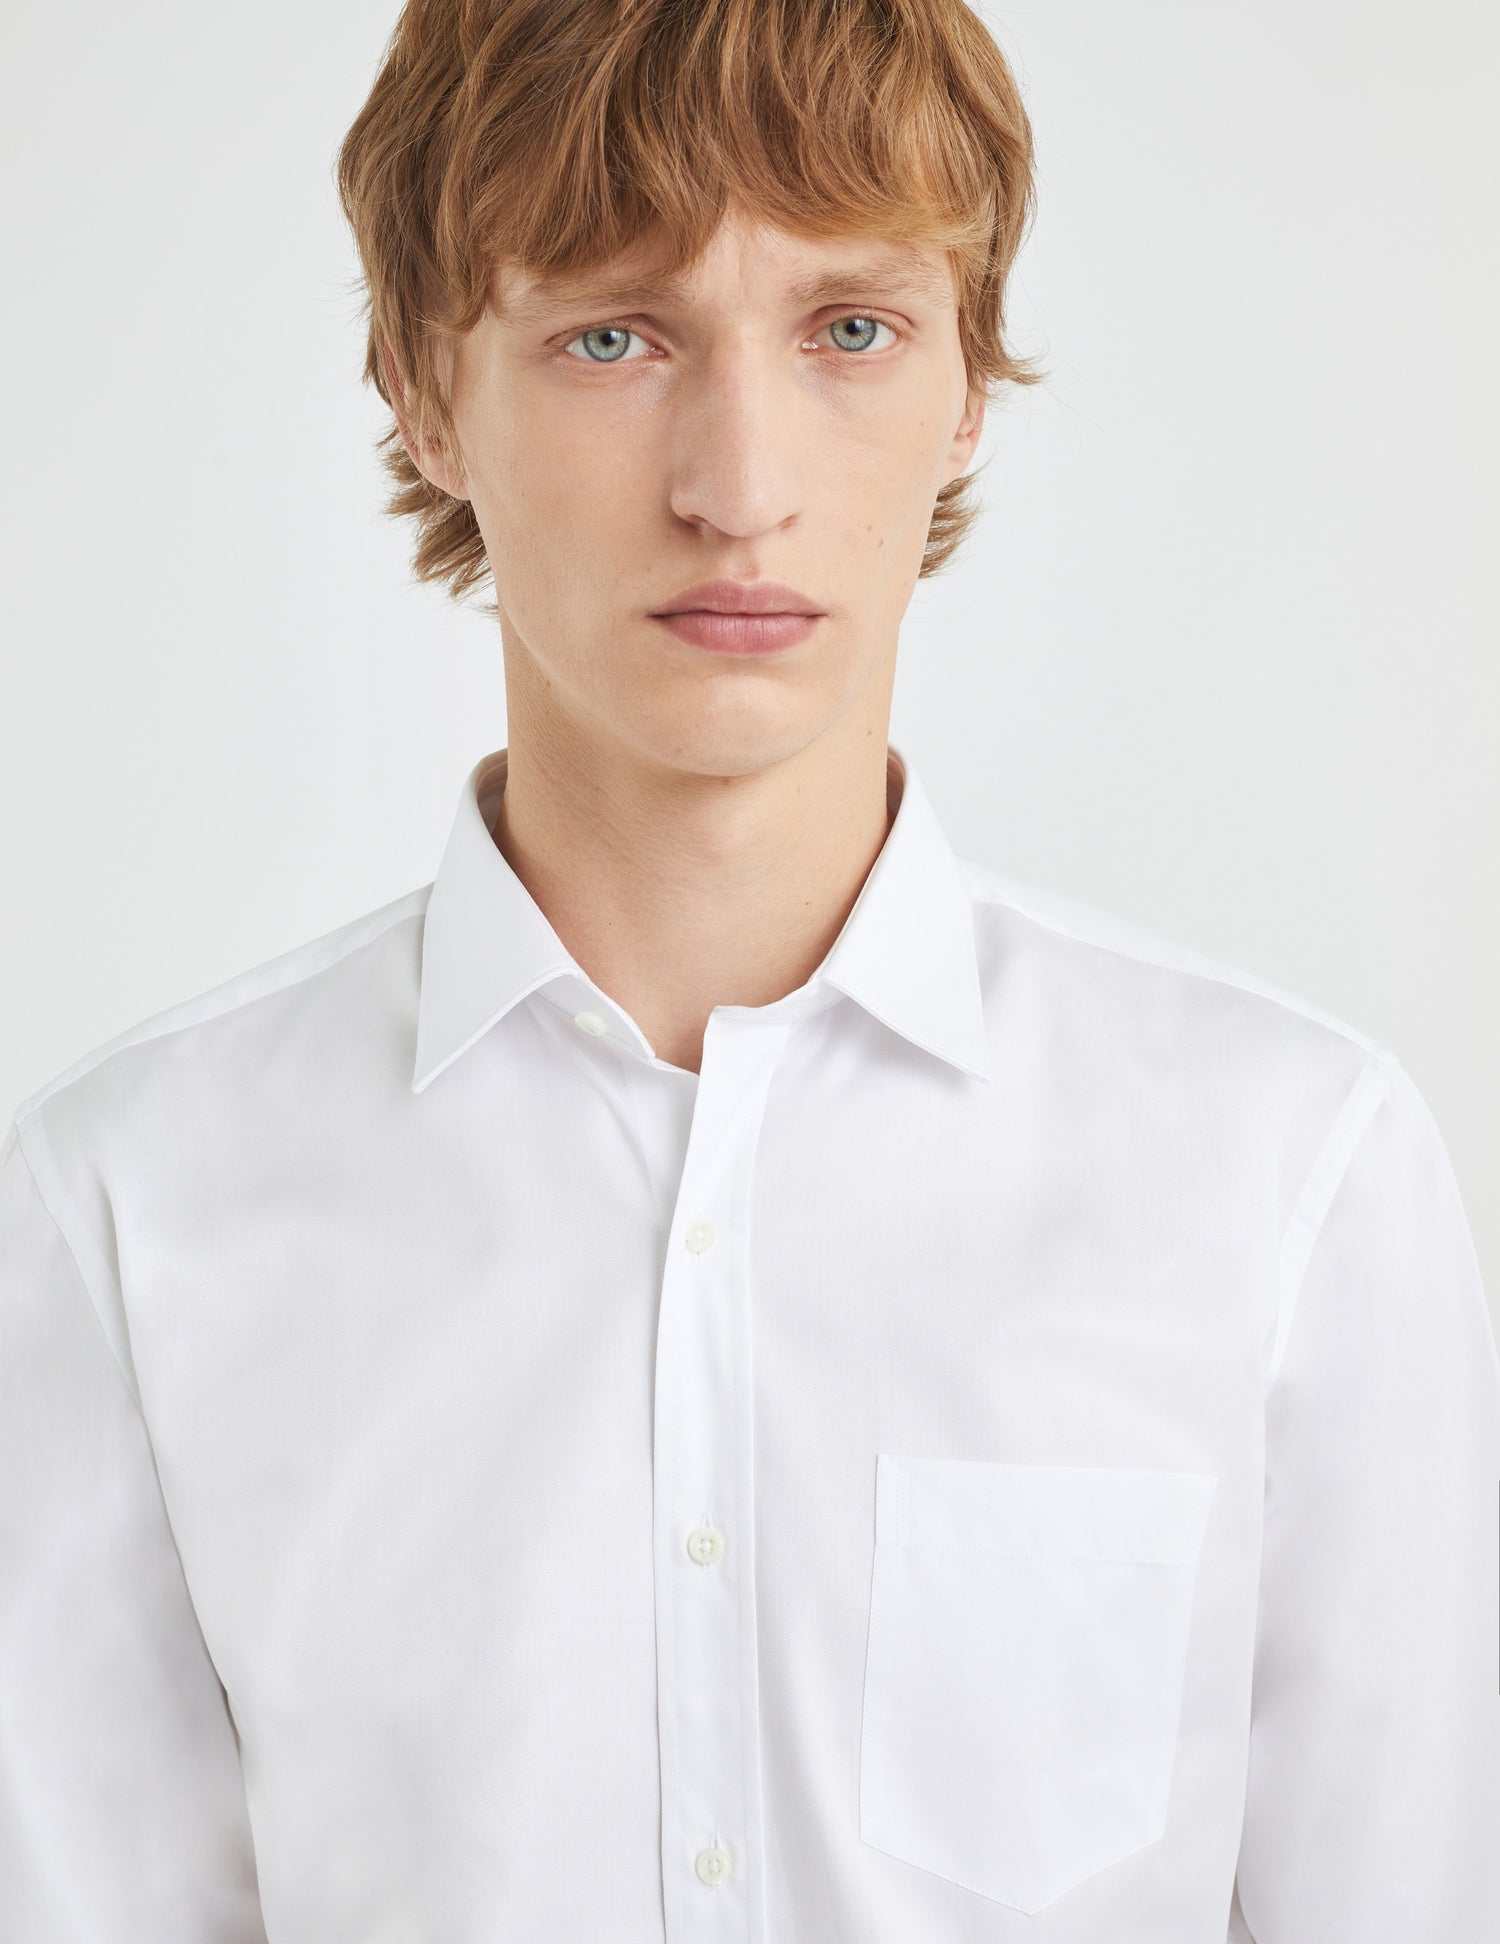 Classic white shirt - Twill - Figaret Collar#5